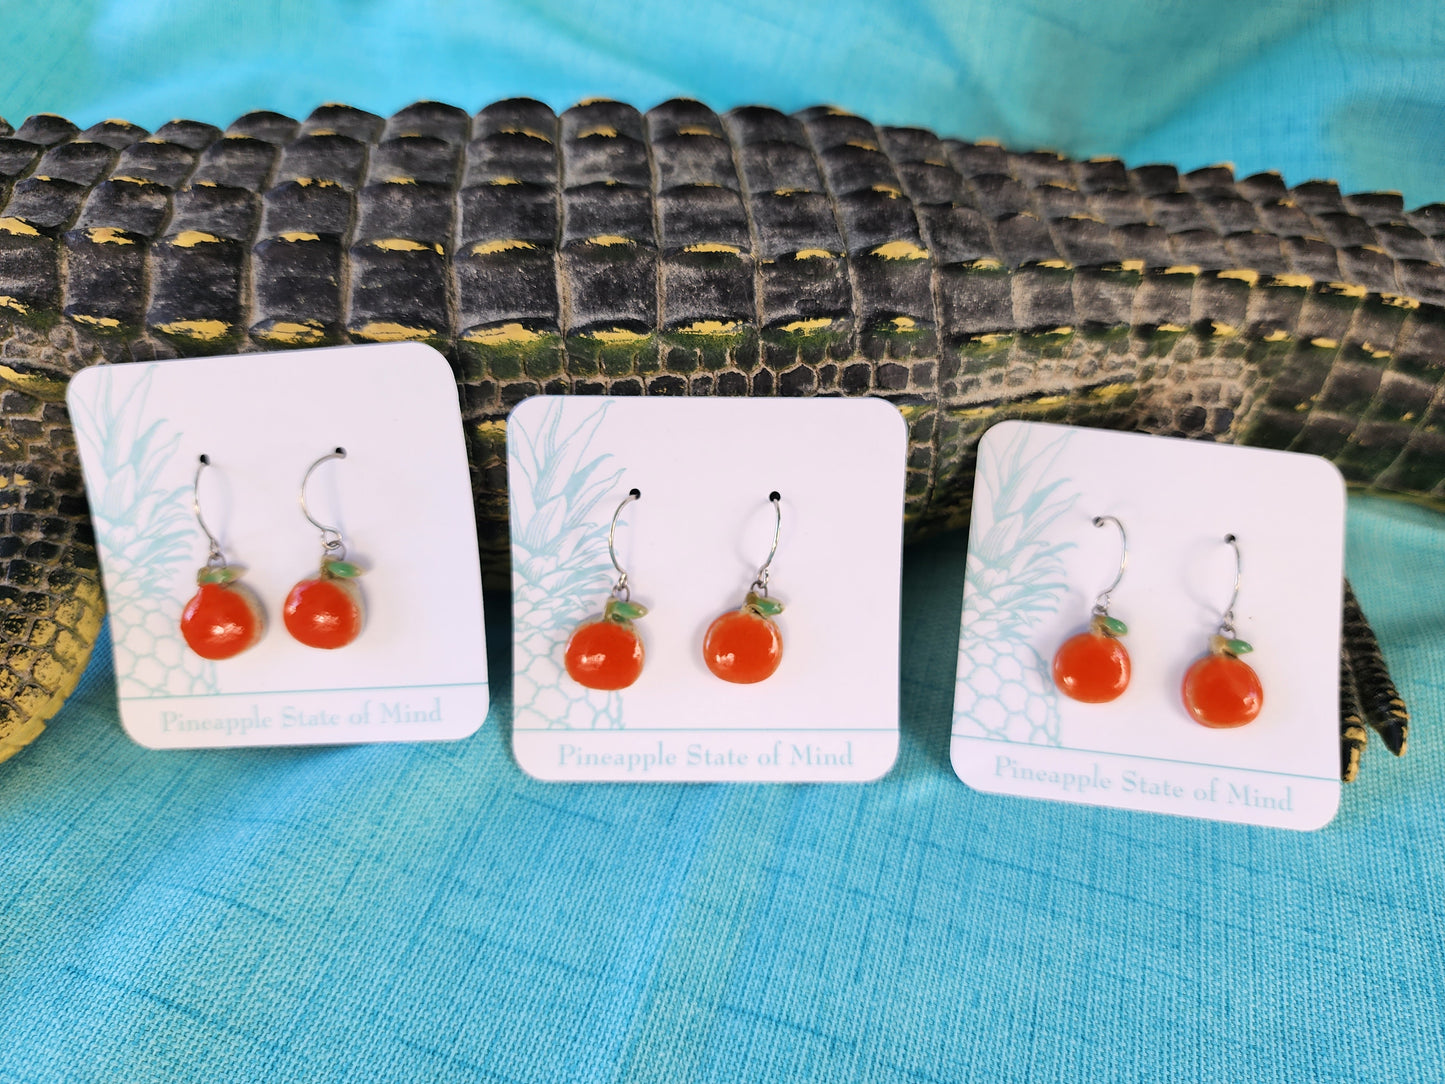 Orange Fruit Shaped Ceramic Earrings